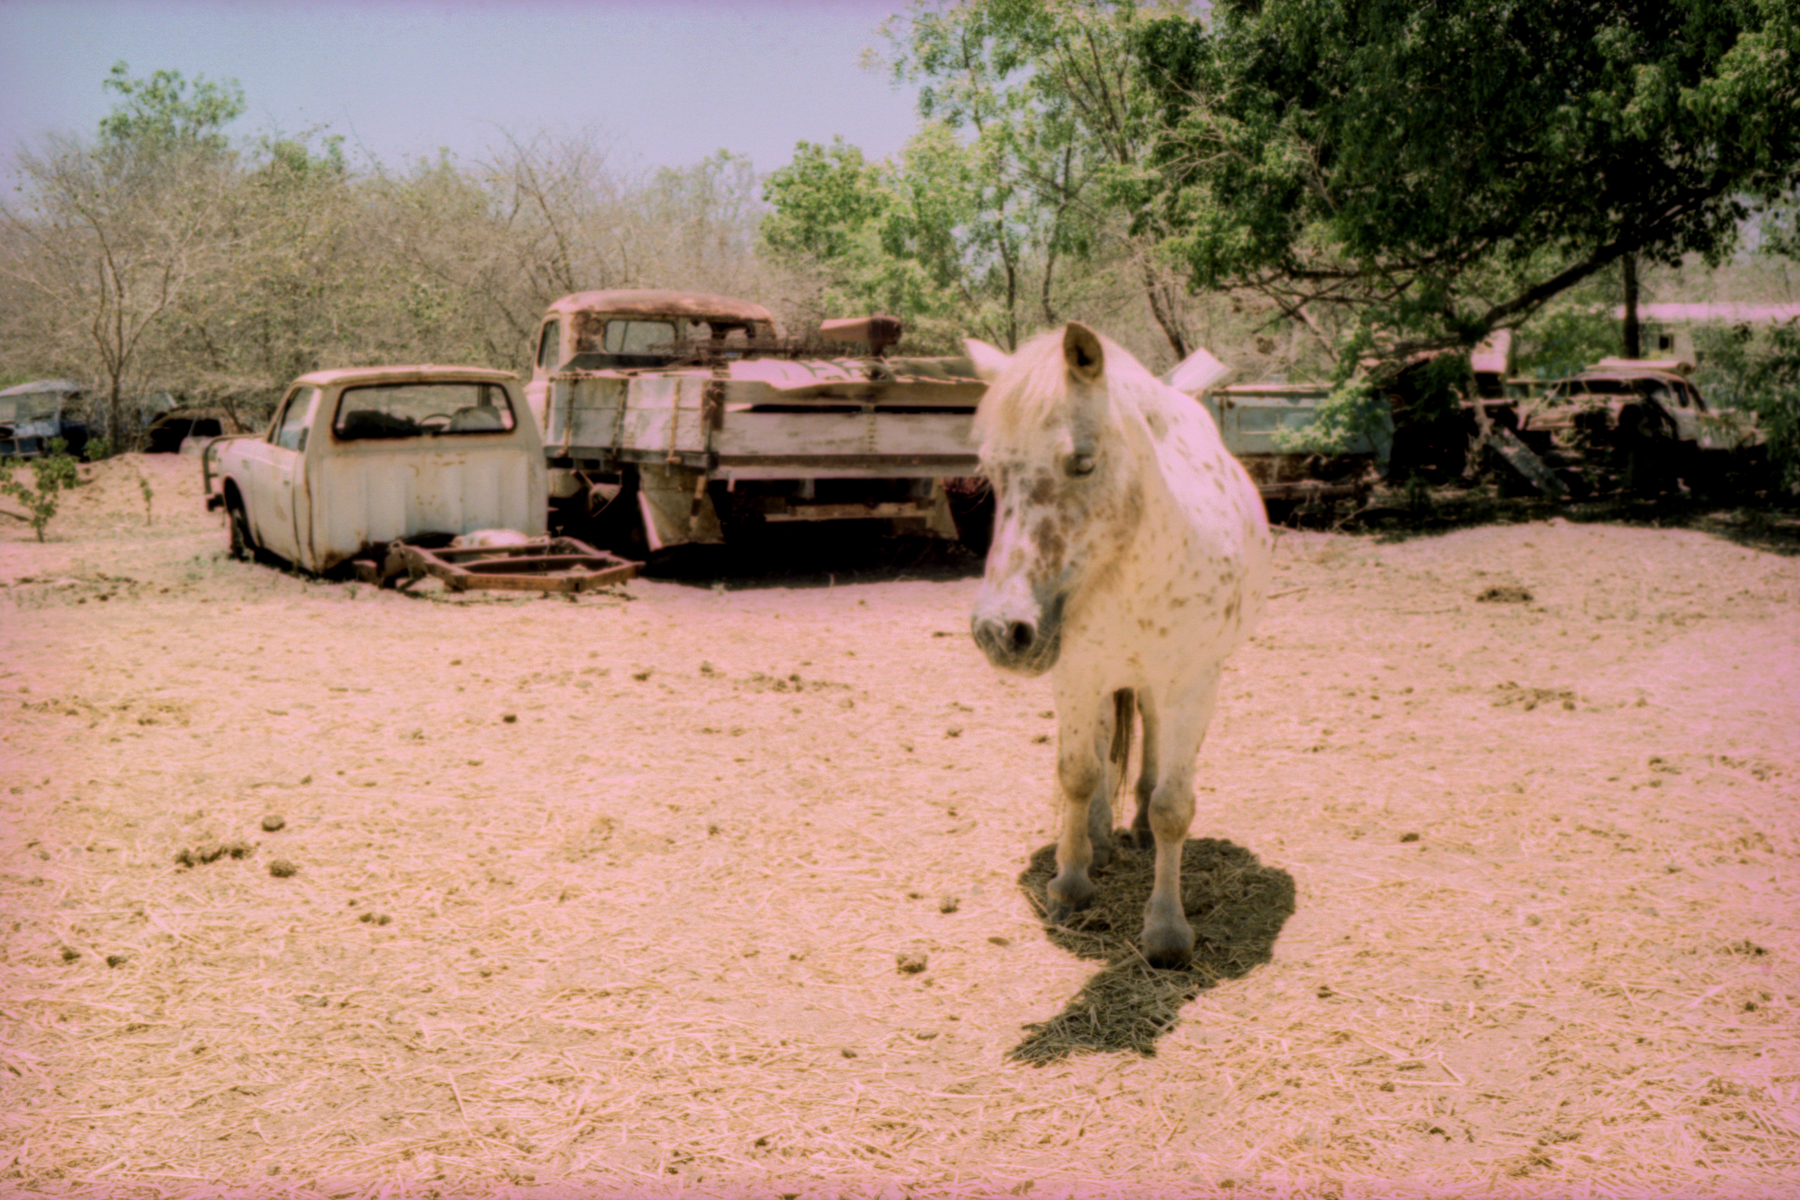 Junkyard Pony | Leica M3 | E100 in C41 | Greg Williamson